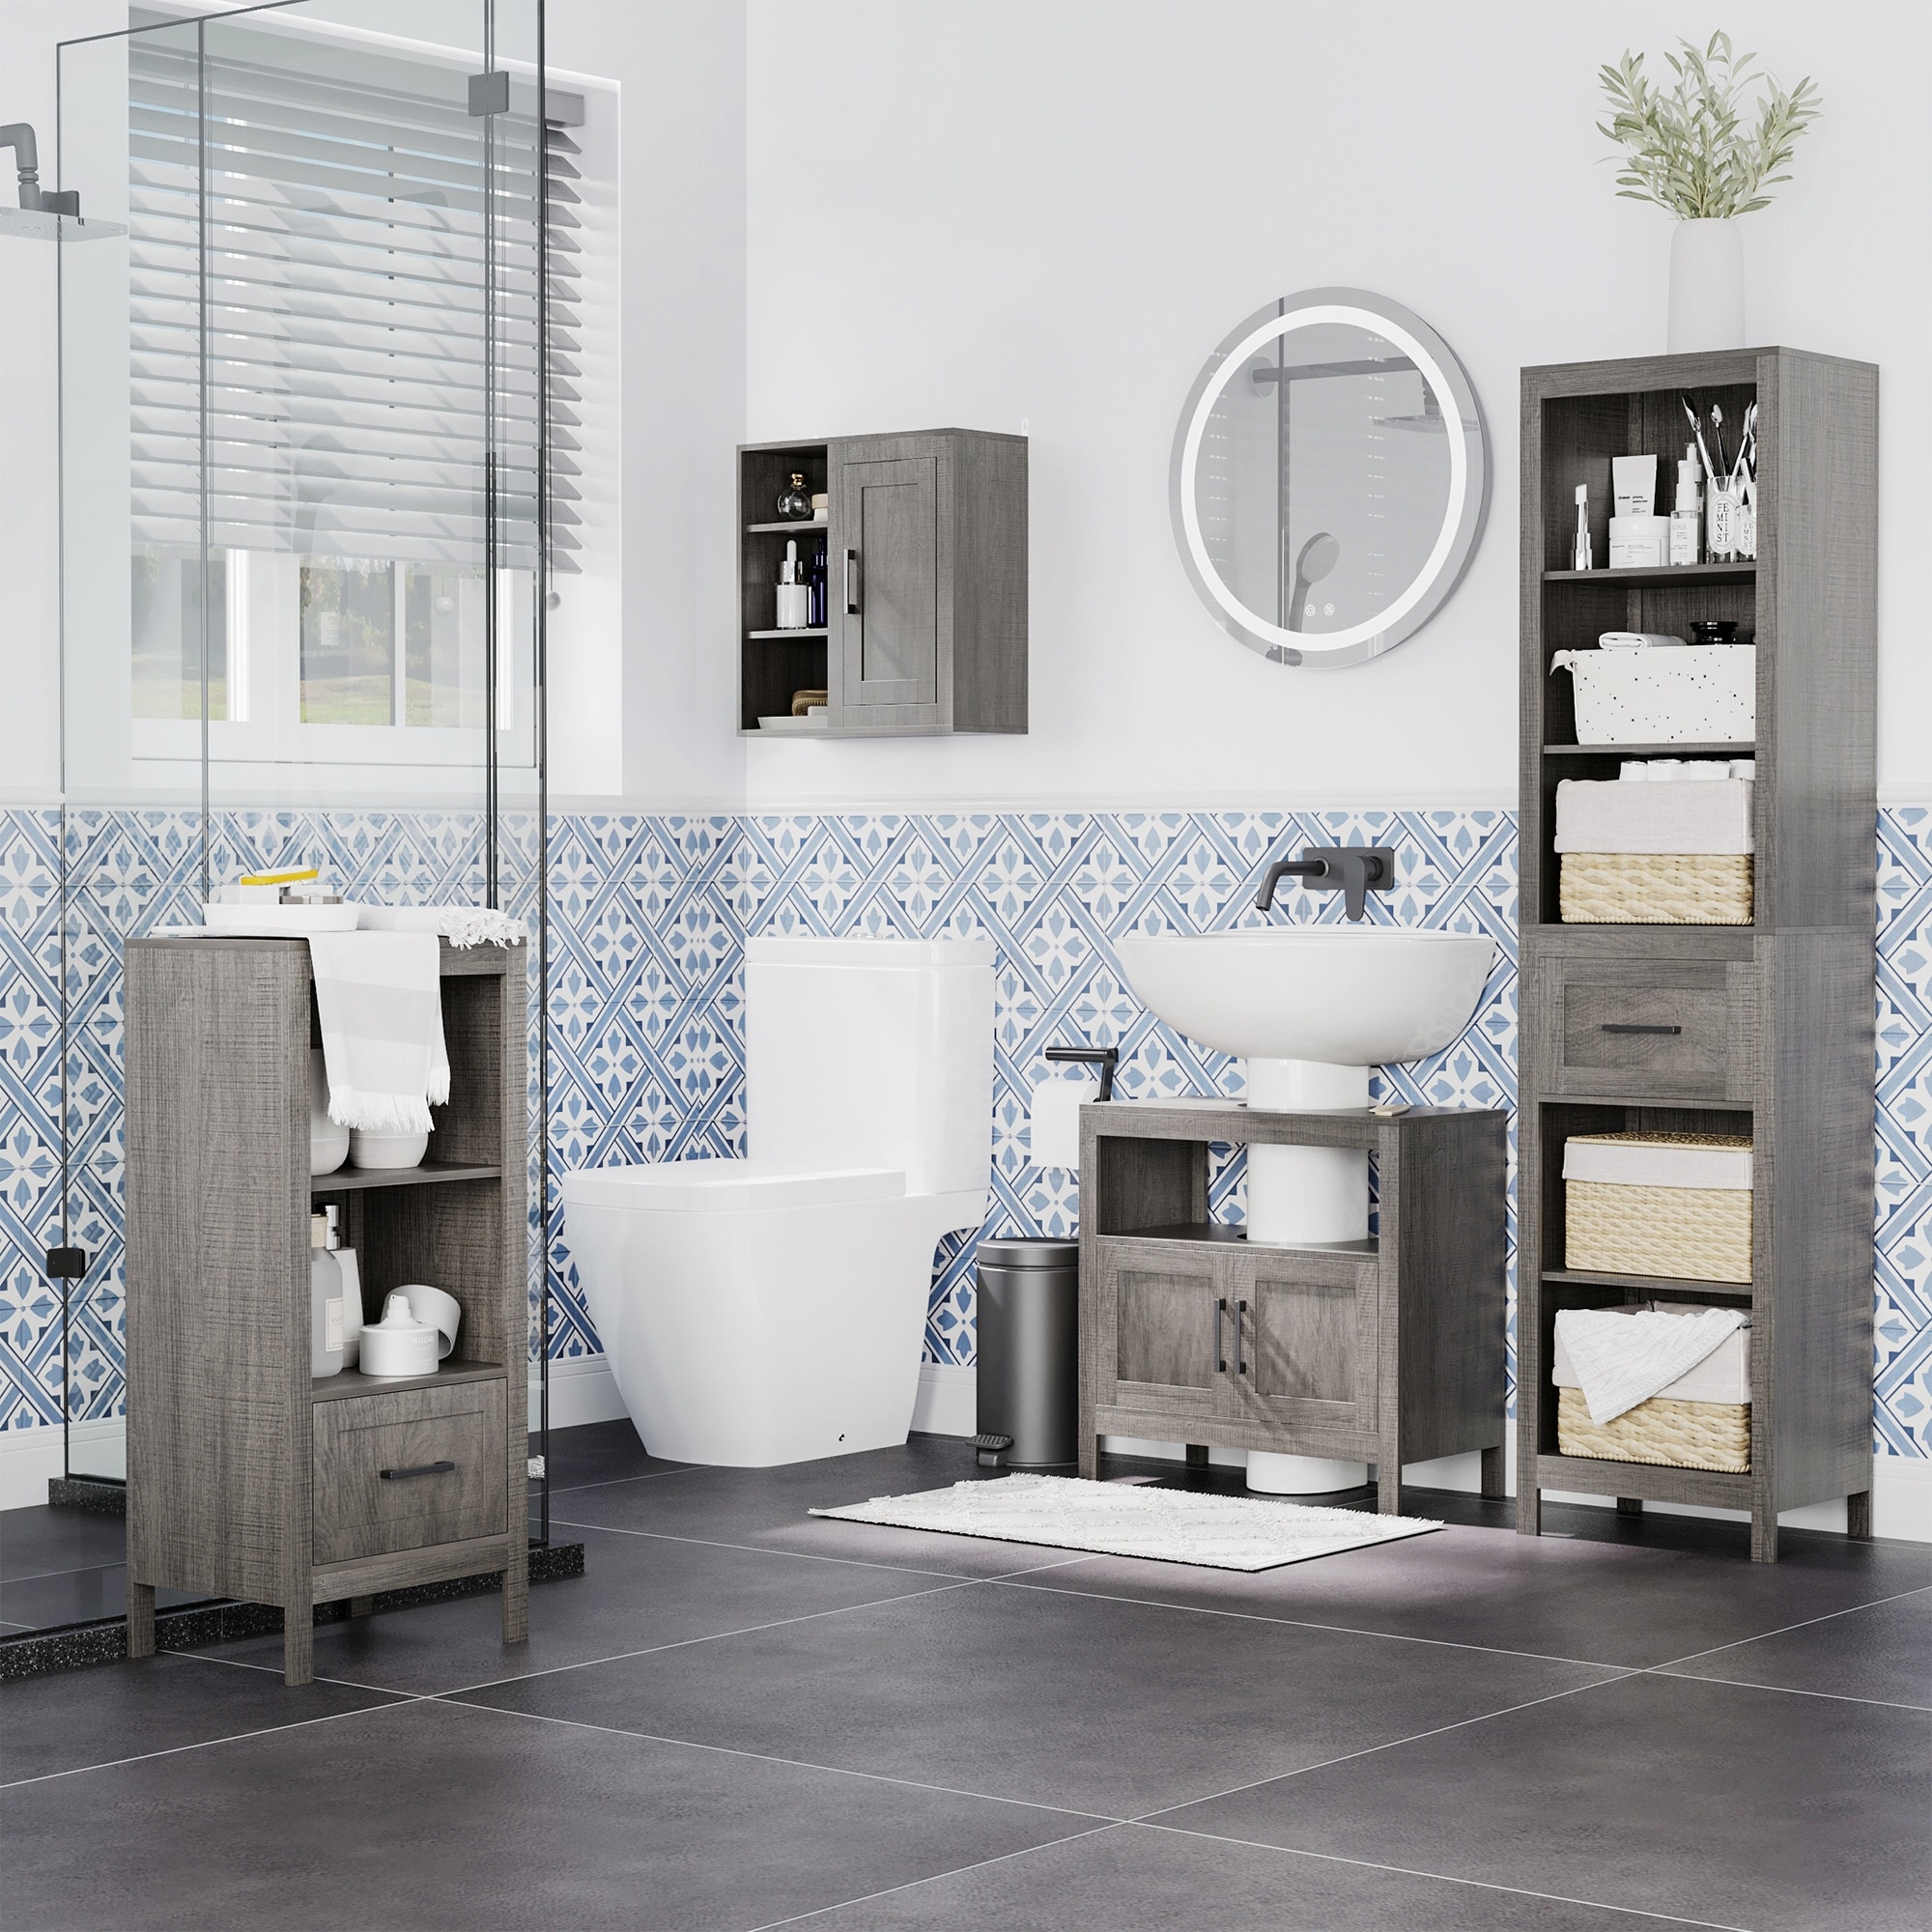 https://ak1.ostkcdn.com/images/products/is/images/direct/17bba85595e3d1d04aec7f52f2064f8a73a9e1e4/kleankin-Pedestal-Sink-Storage-Cabinet%2C-Bathroom-Sink-Cabinet-with-Doors-and-Open-Shelf%2C-Bathroom-Vanity%2C-Space-Saver-Organizer.jpg